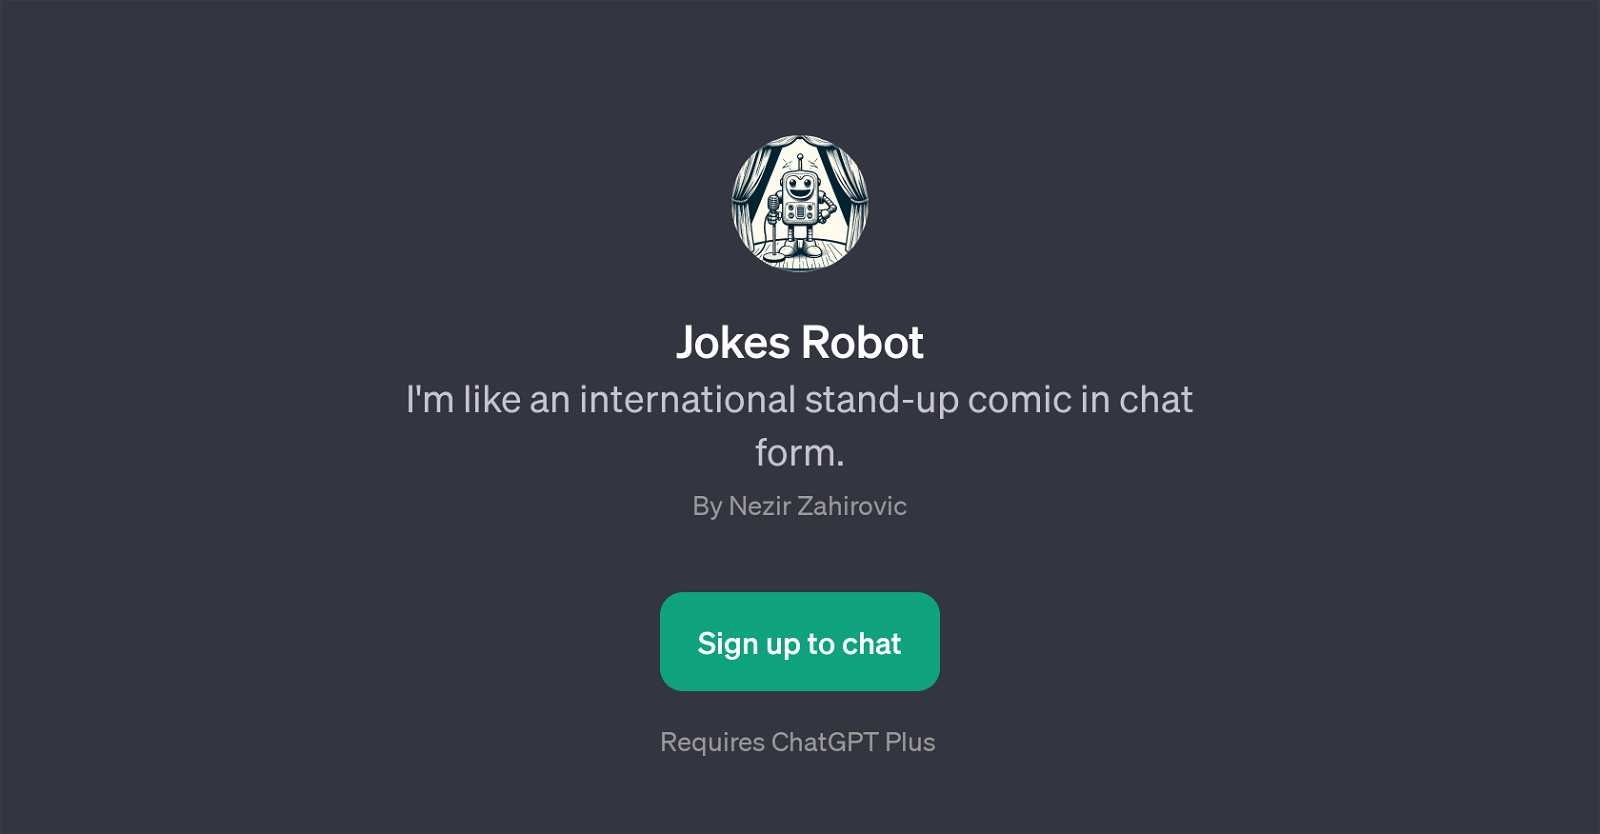 Jokes Robot website